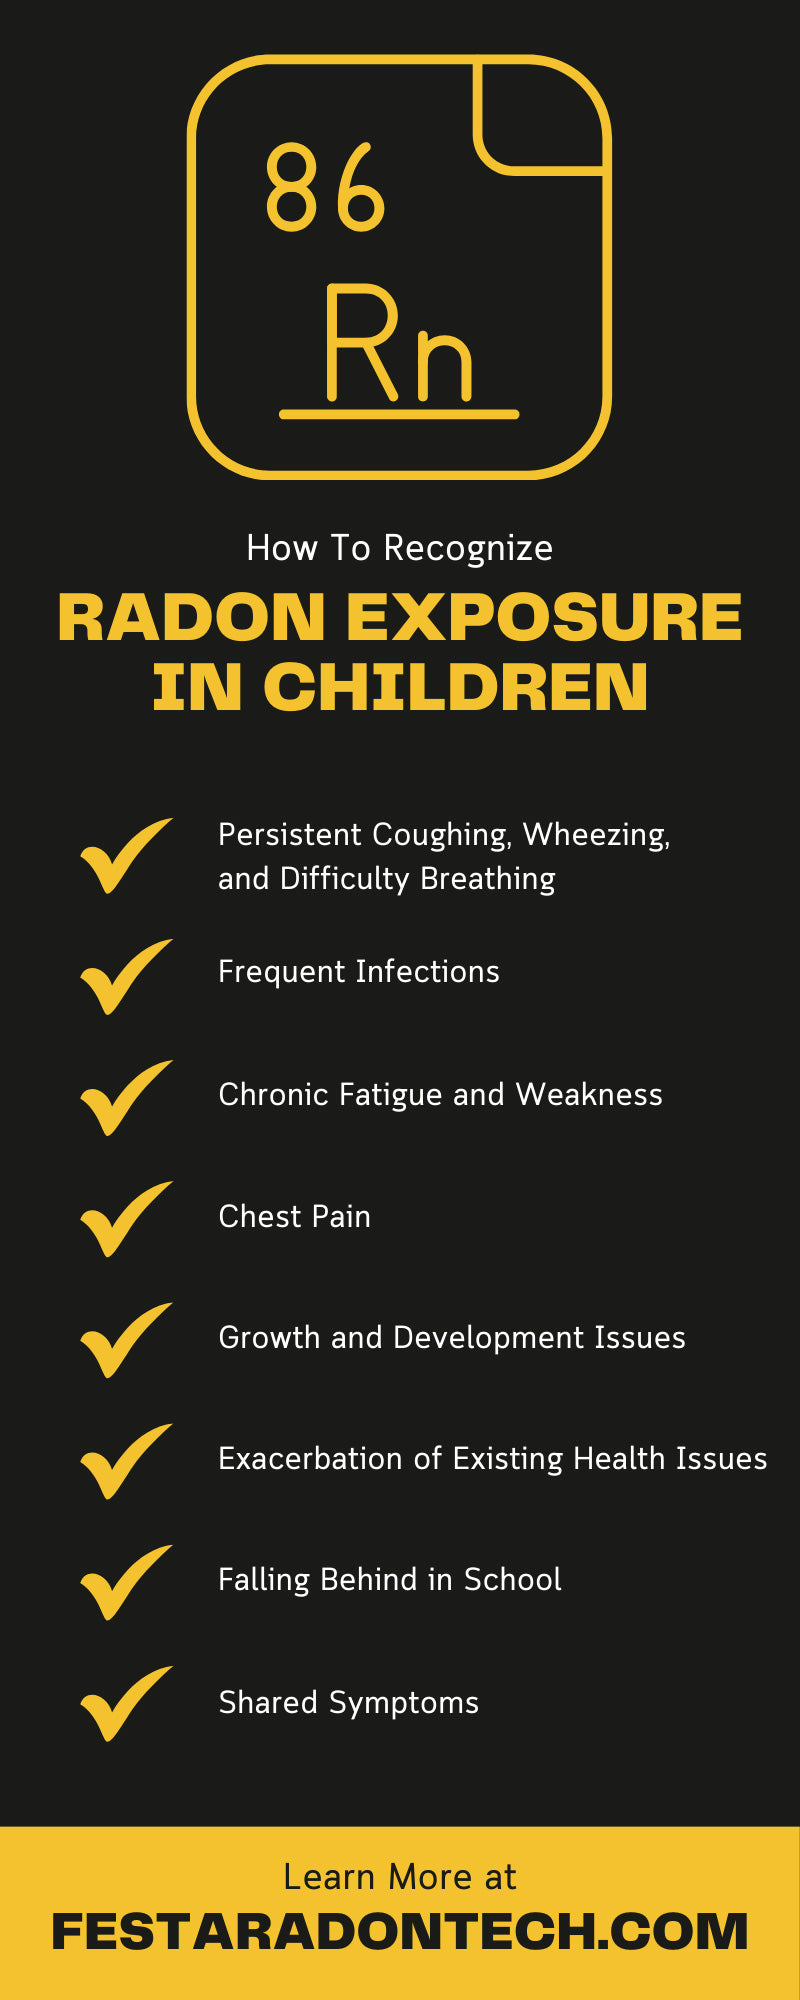 How To Recognize Radon Exposure in Children